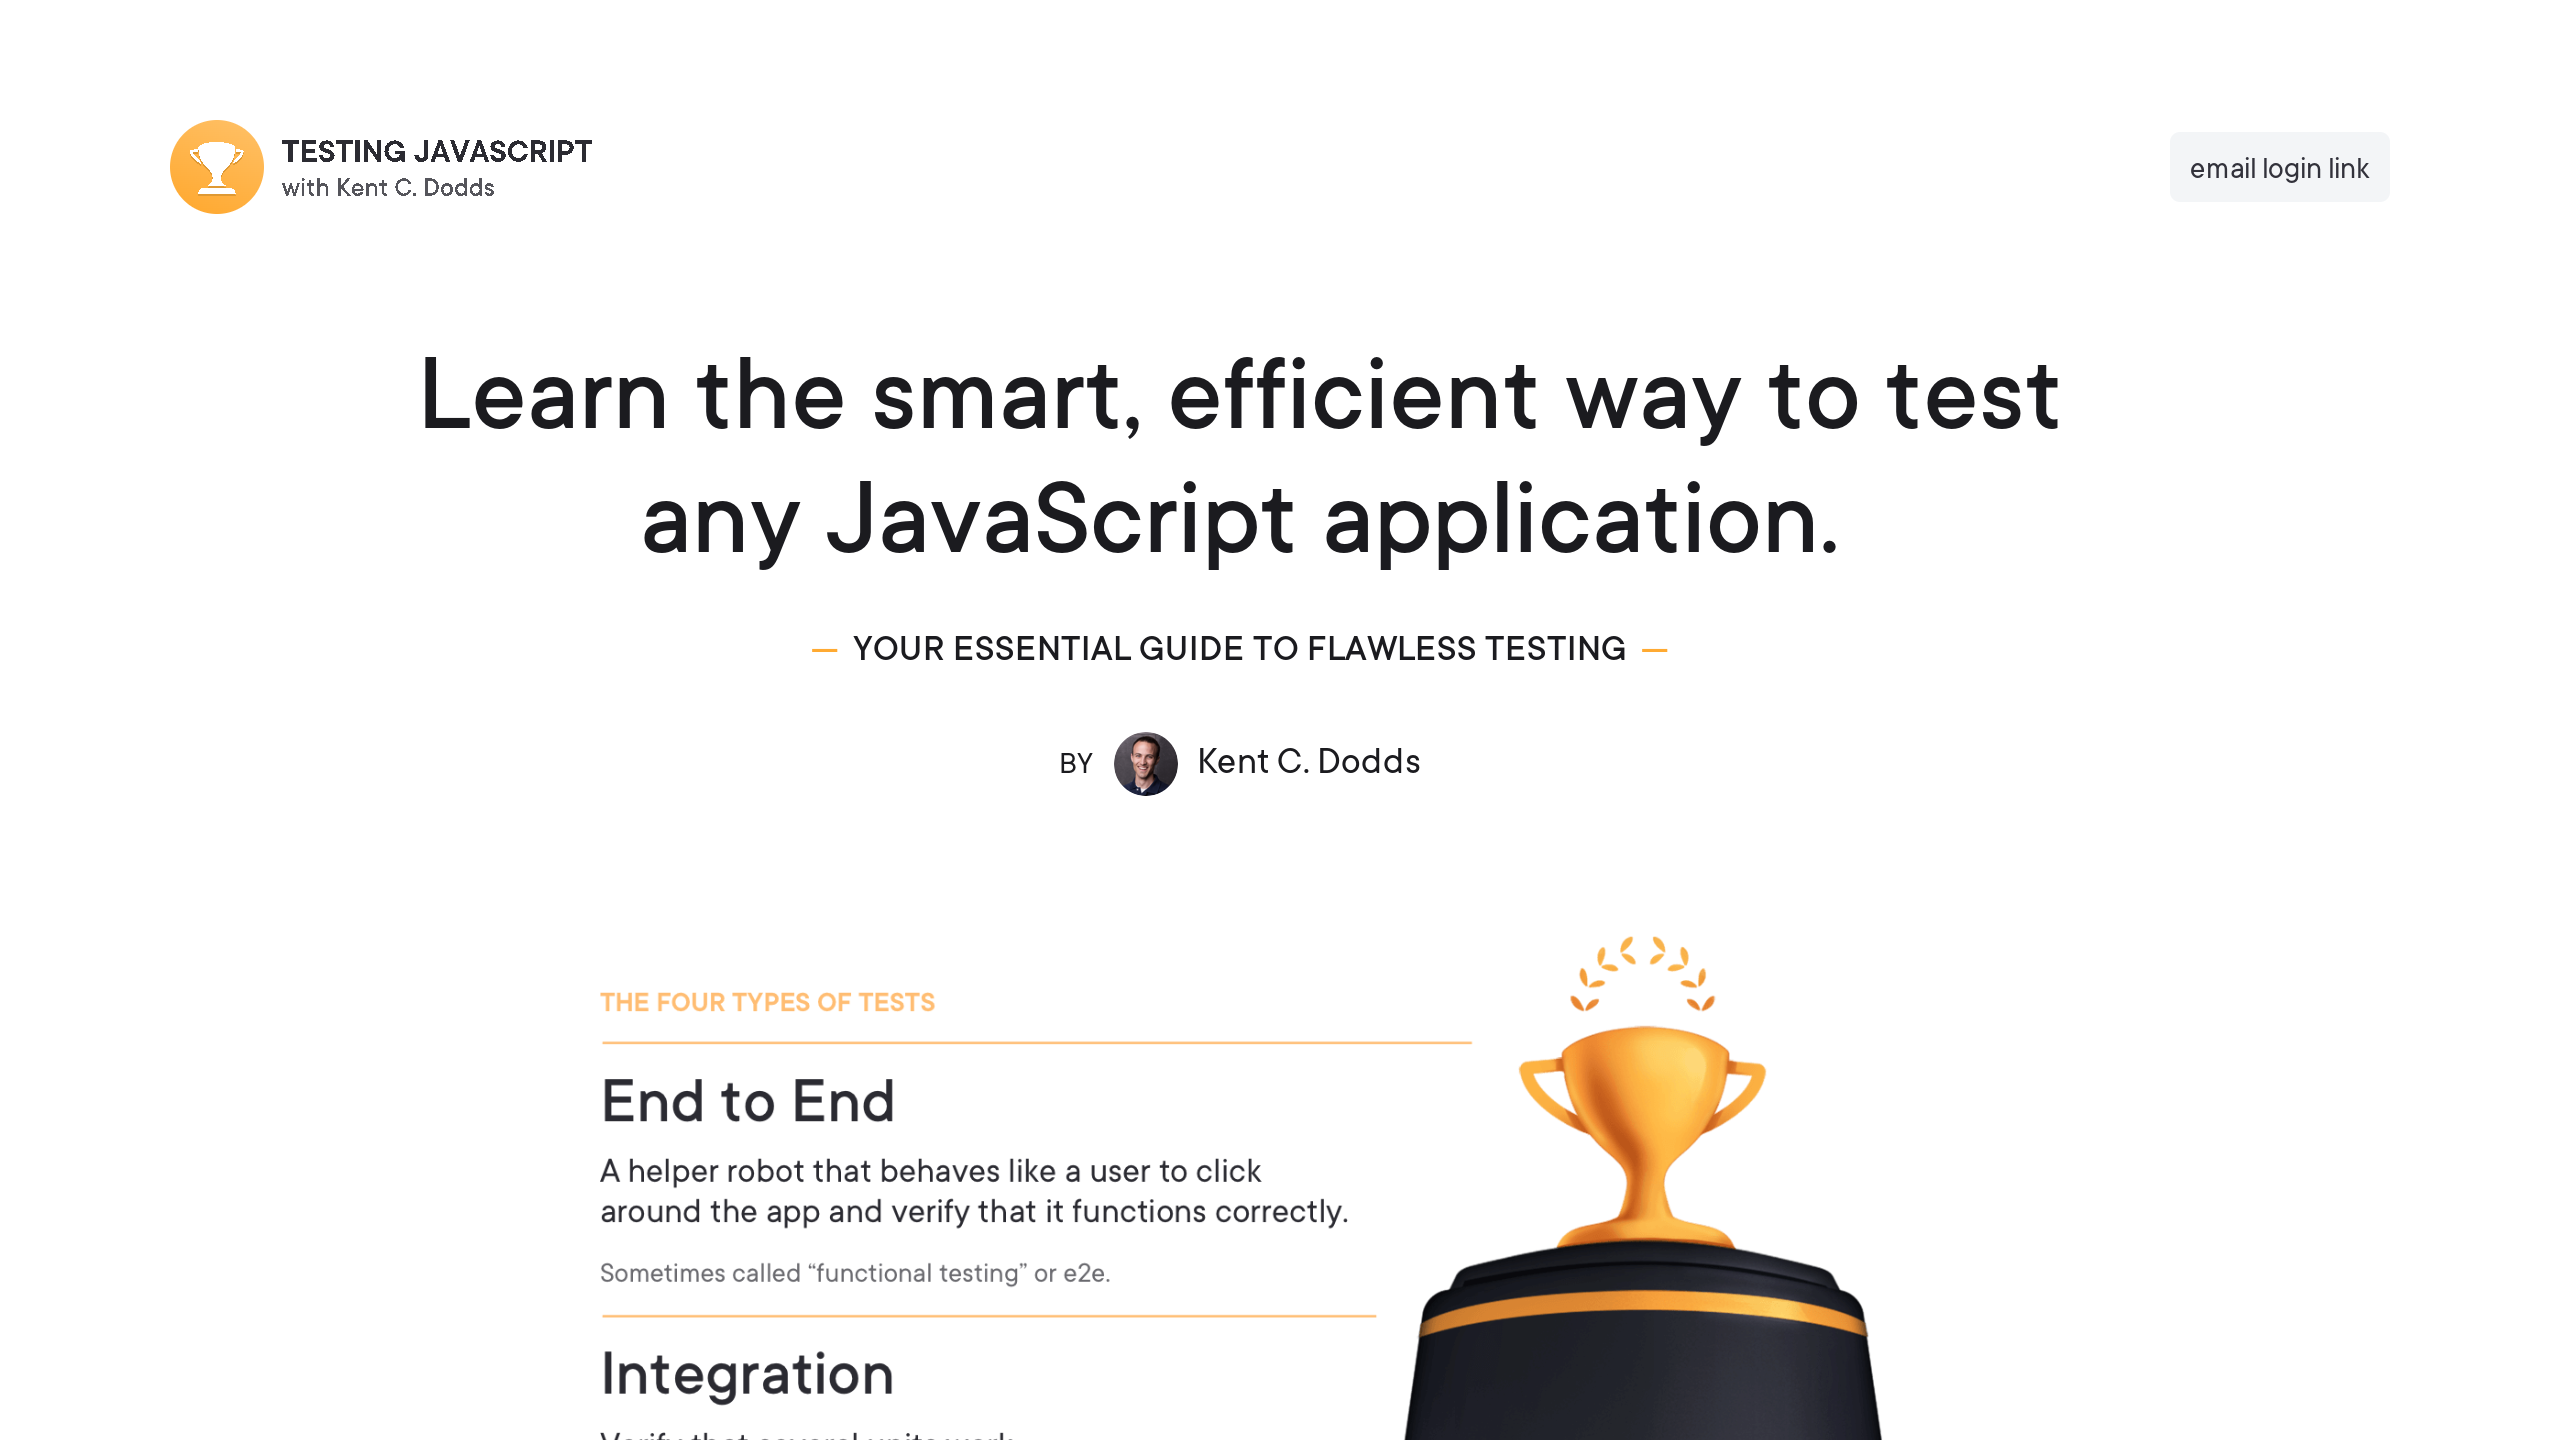 Testing JavaScript's website screenshot